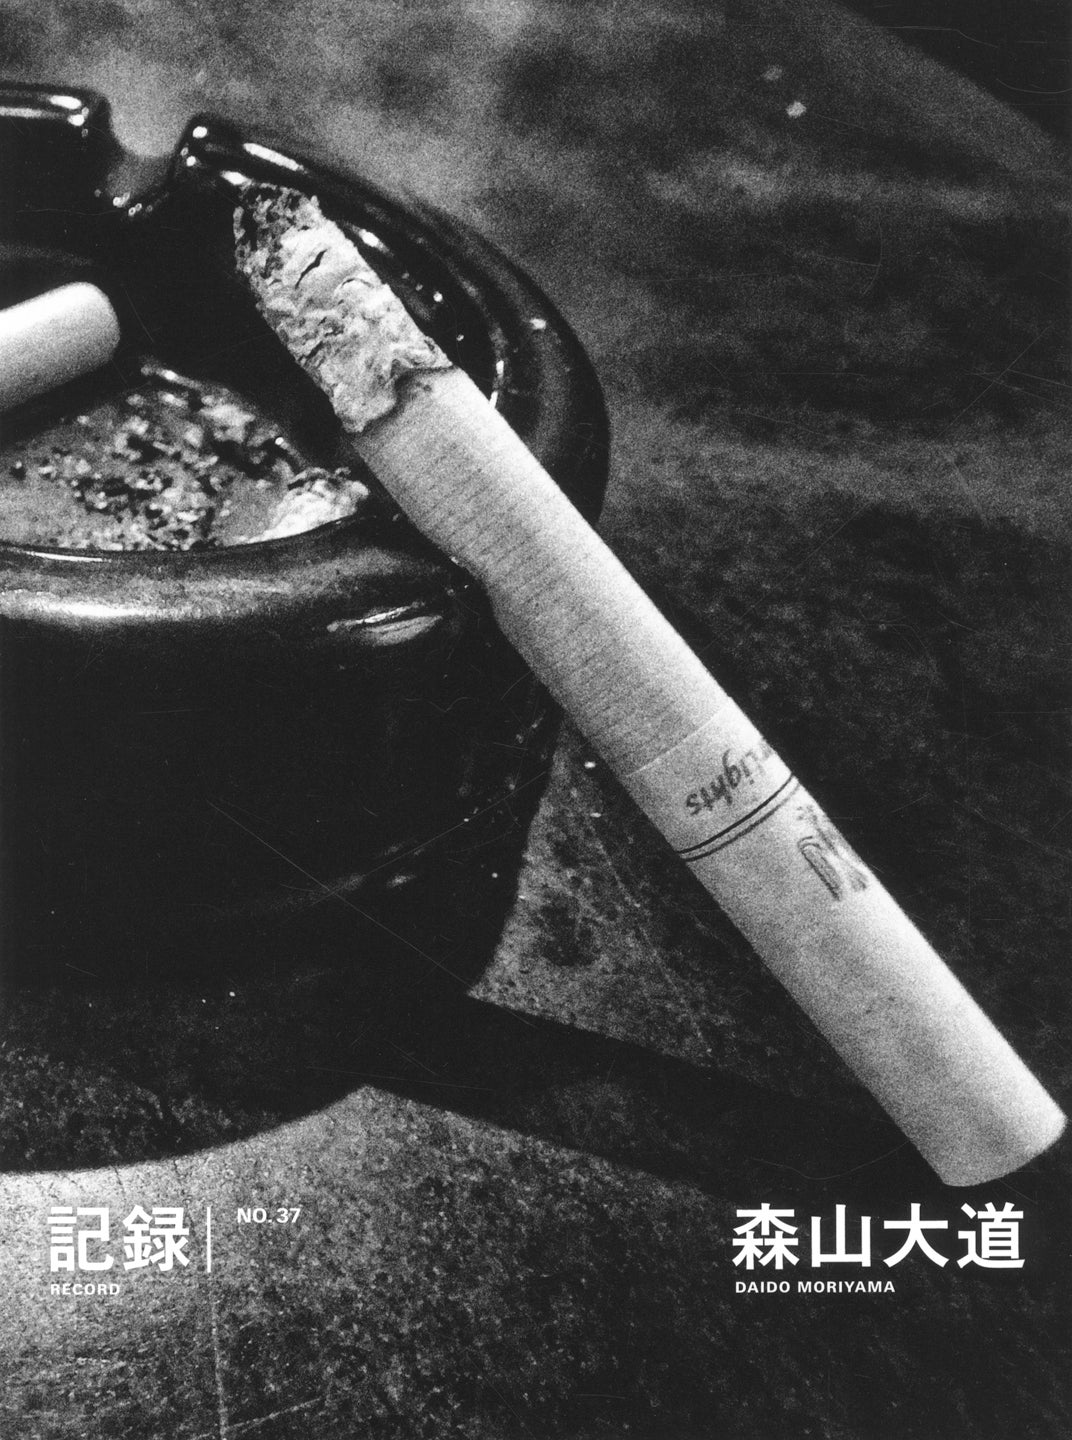 Daido Moriyama: Record Nos. 1-50 / Kiroku, Nos. 1-50, Complete Set (Includes Reprinted Edition of Nos. 1-5 and No. 6 through No. 50) [No. 20 through No. 50 only are SIGNED]